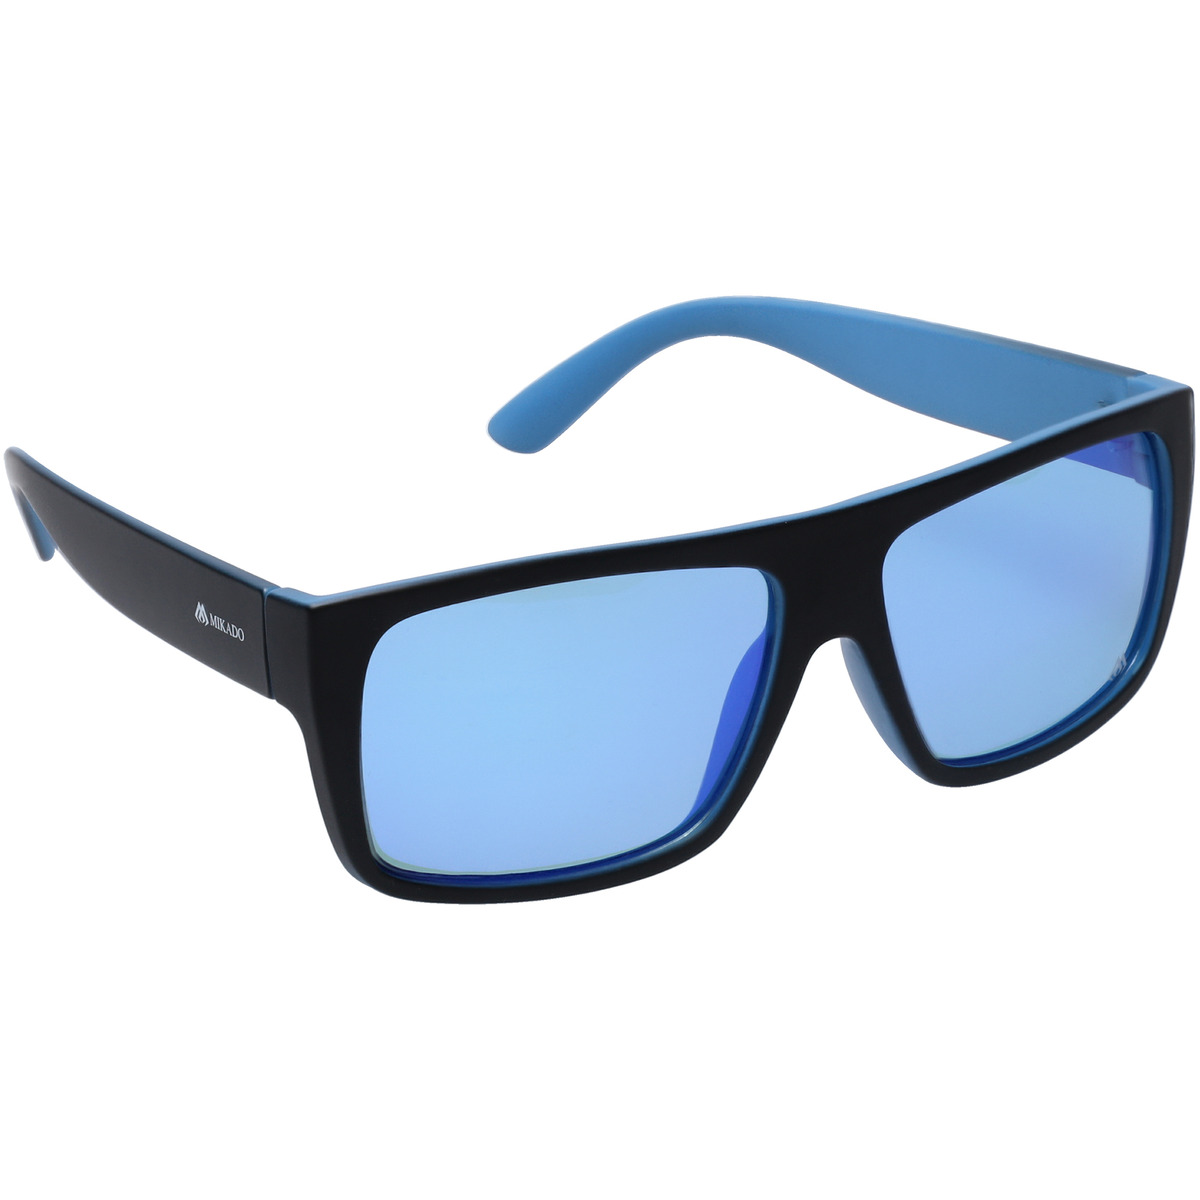 Mikado Sunglasses Polarized - 595 BLUE AND PURPLE MIRROR EFFECT